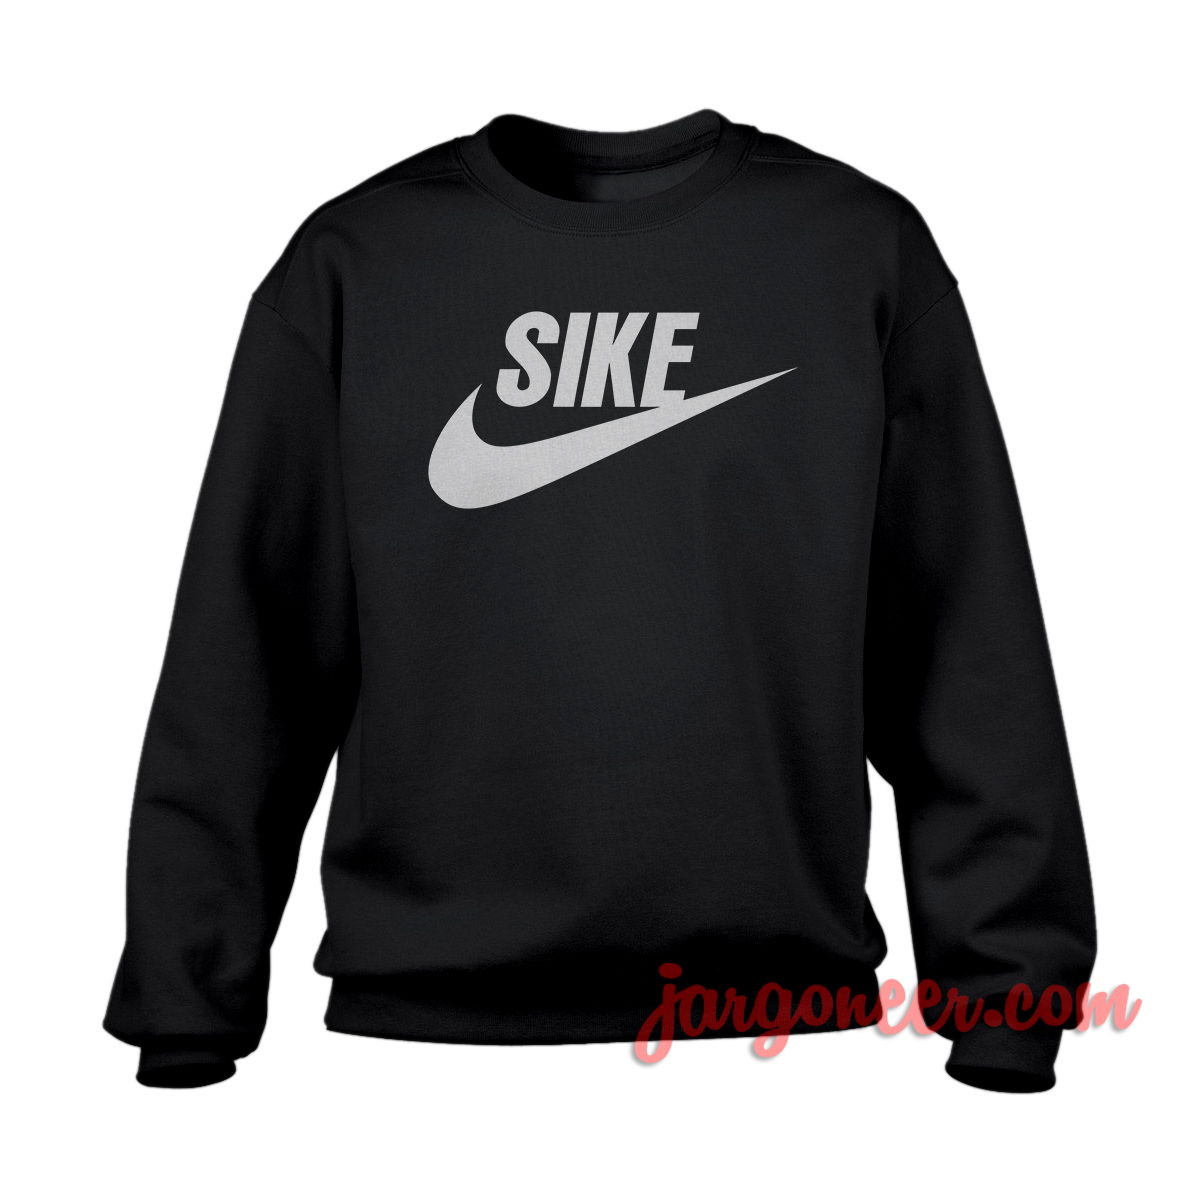 Sike Black Sweatshirt - Shop Unique Graphic Cool Shirt Designs